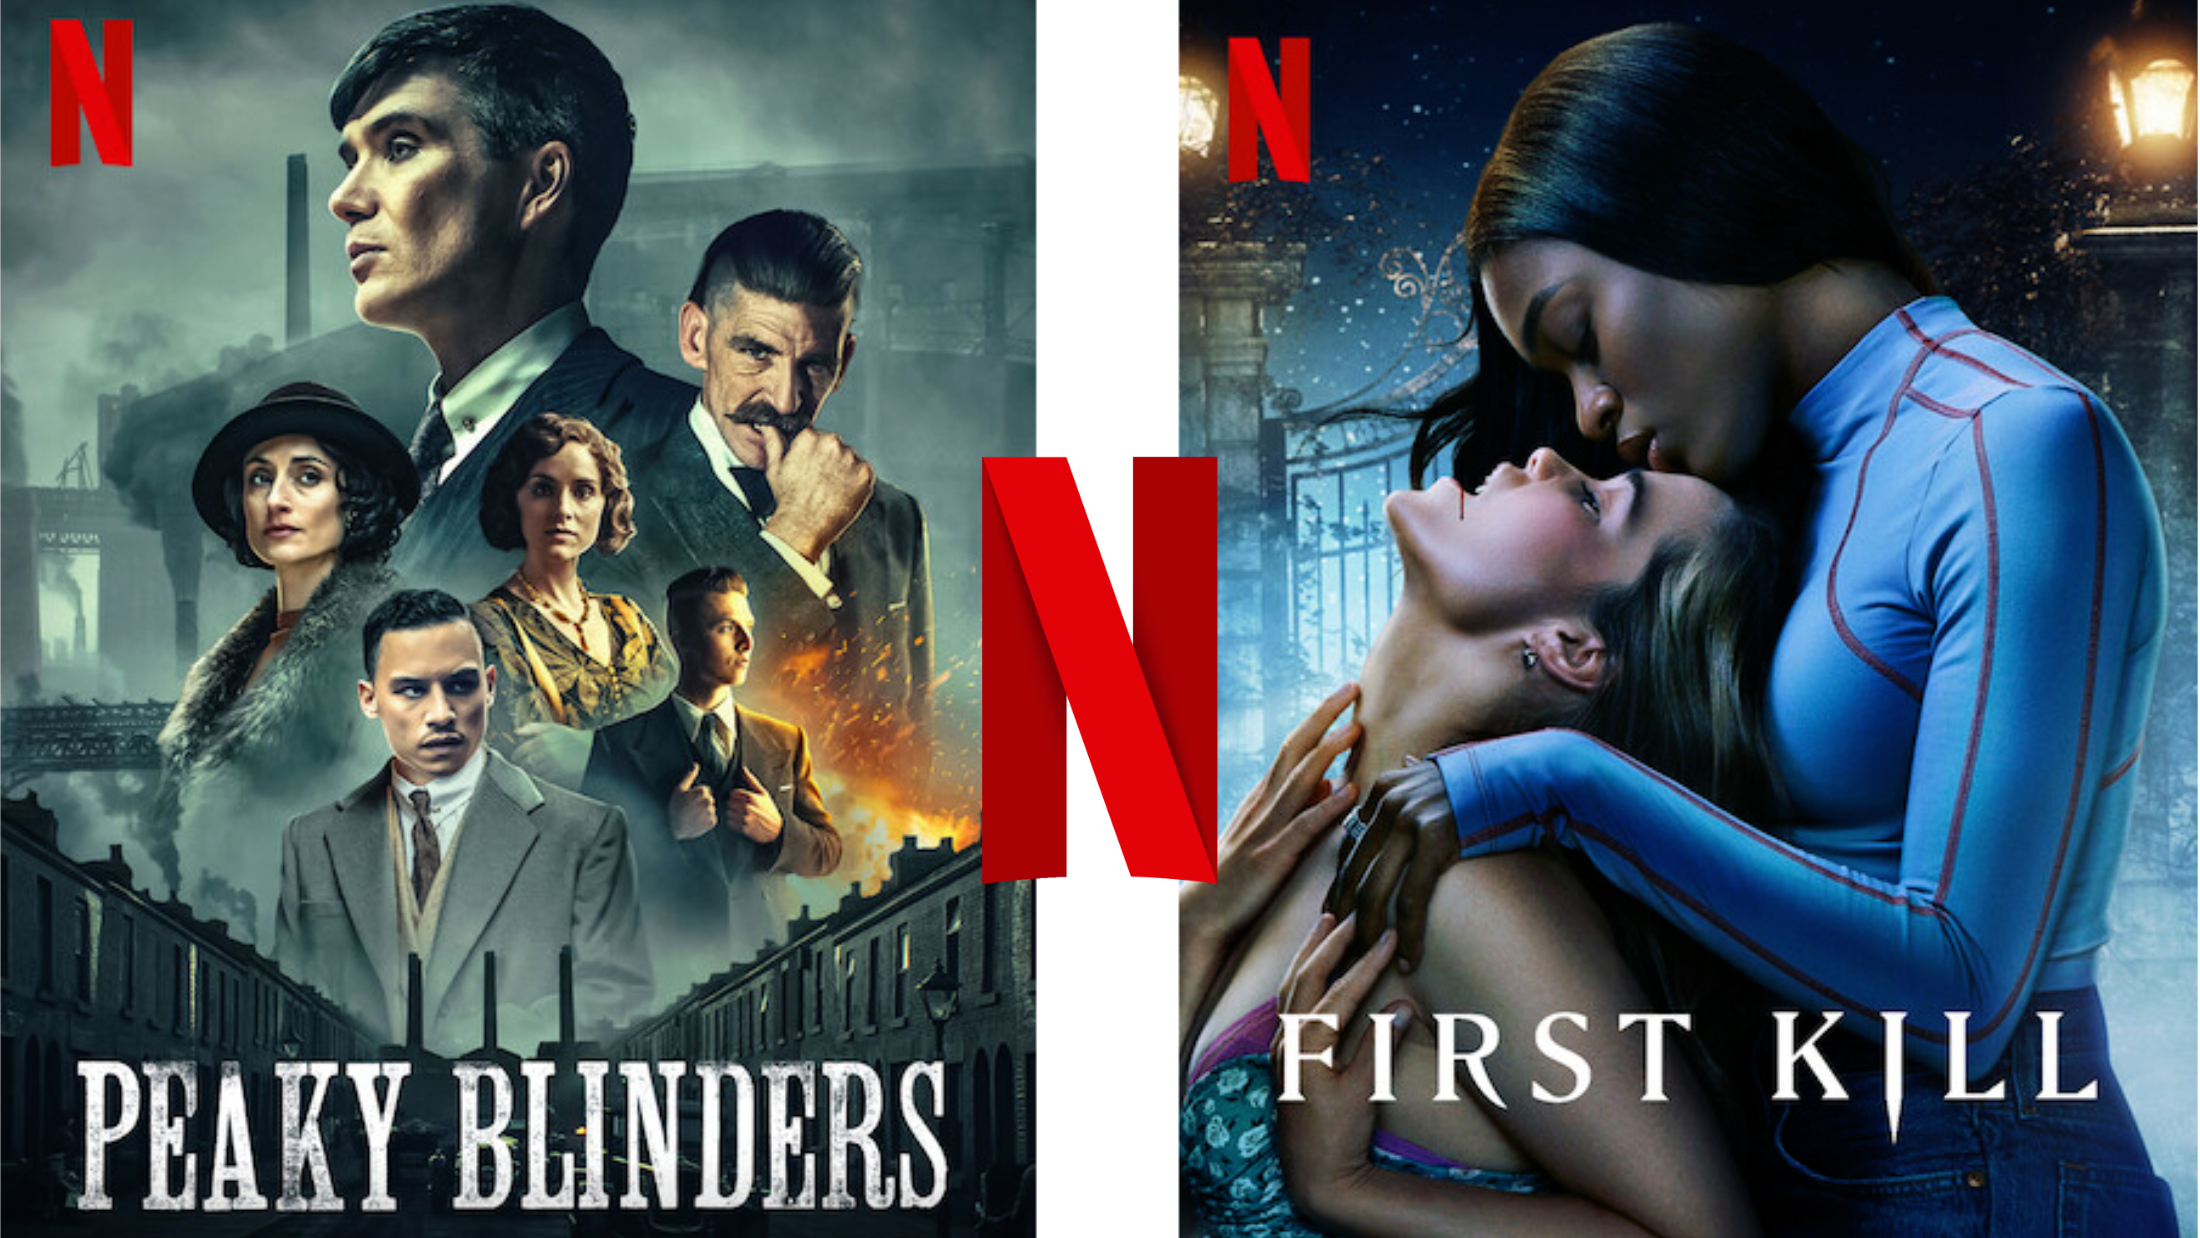 New Netflix Canada Releases This Week [10 juin]

